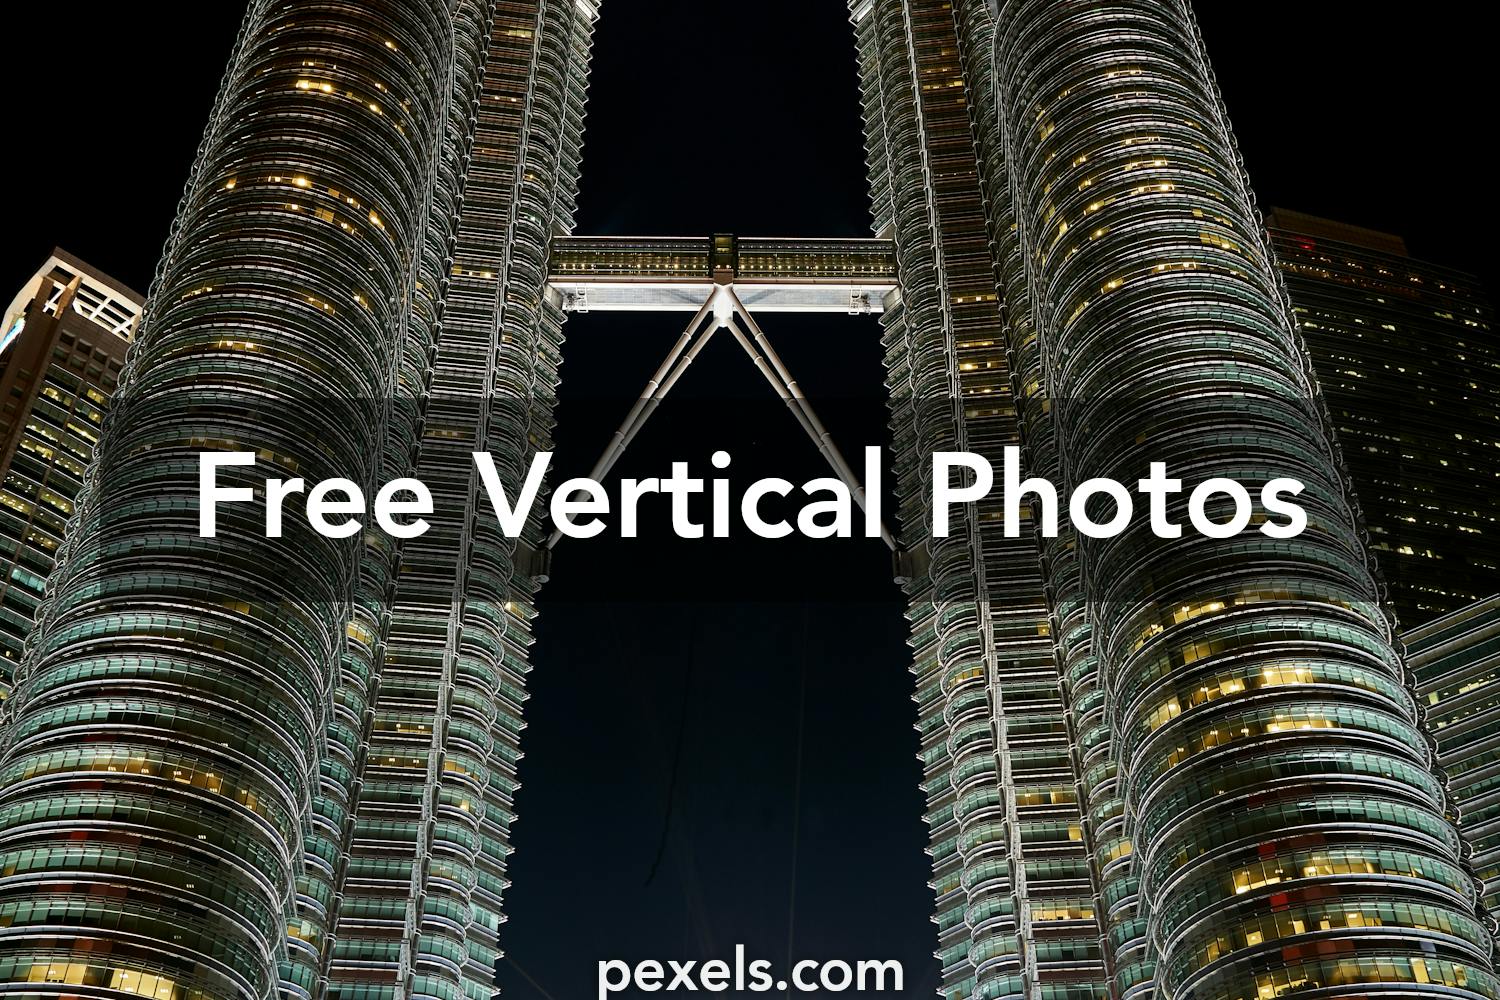 Free stock photos of vertical · Pexels